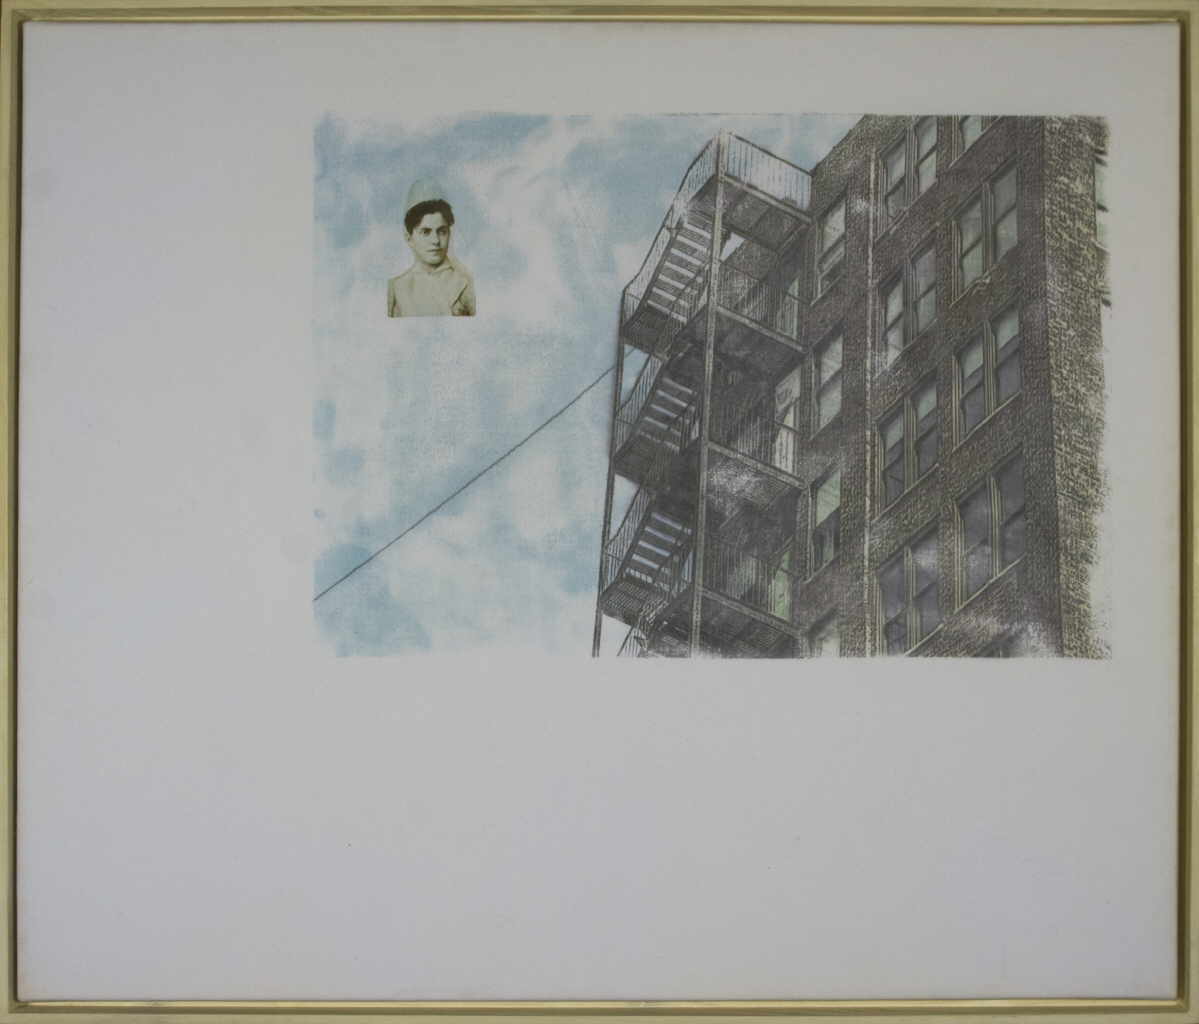 Zauner Christa 
"Escalator", 2004
Frottage / Leinwand
50 x 60 cm